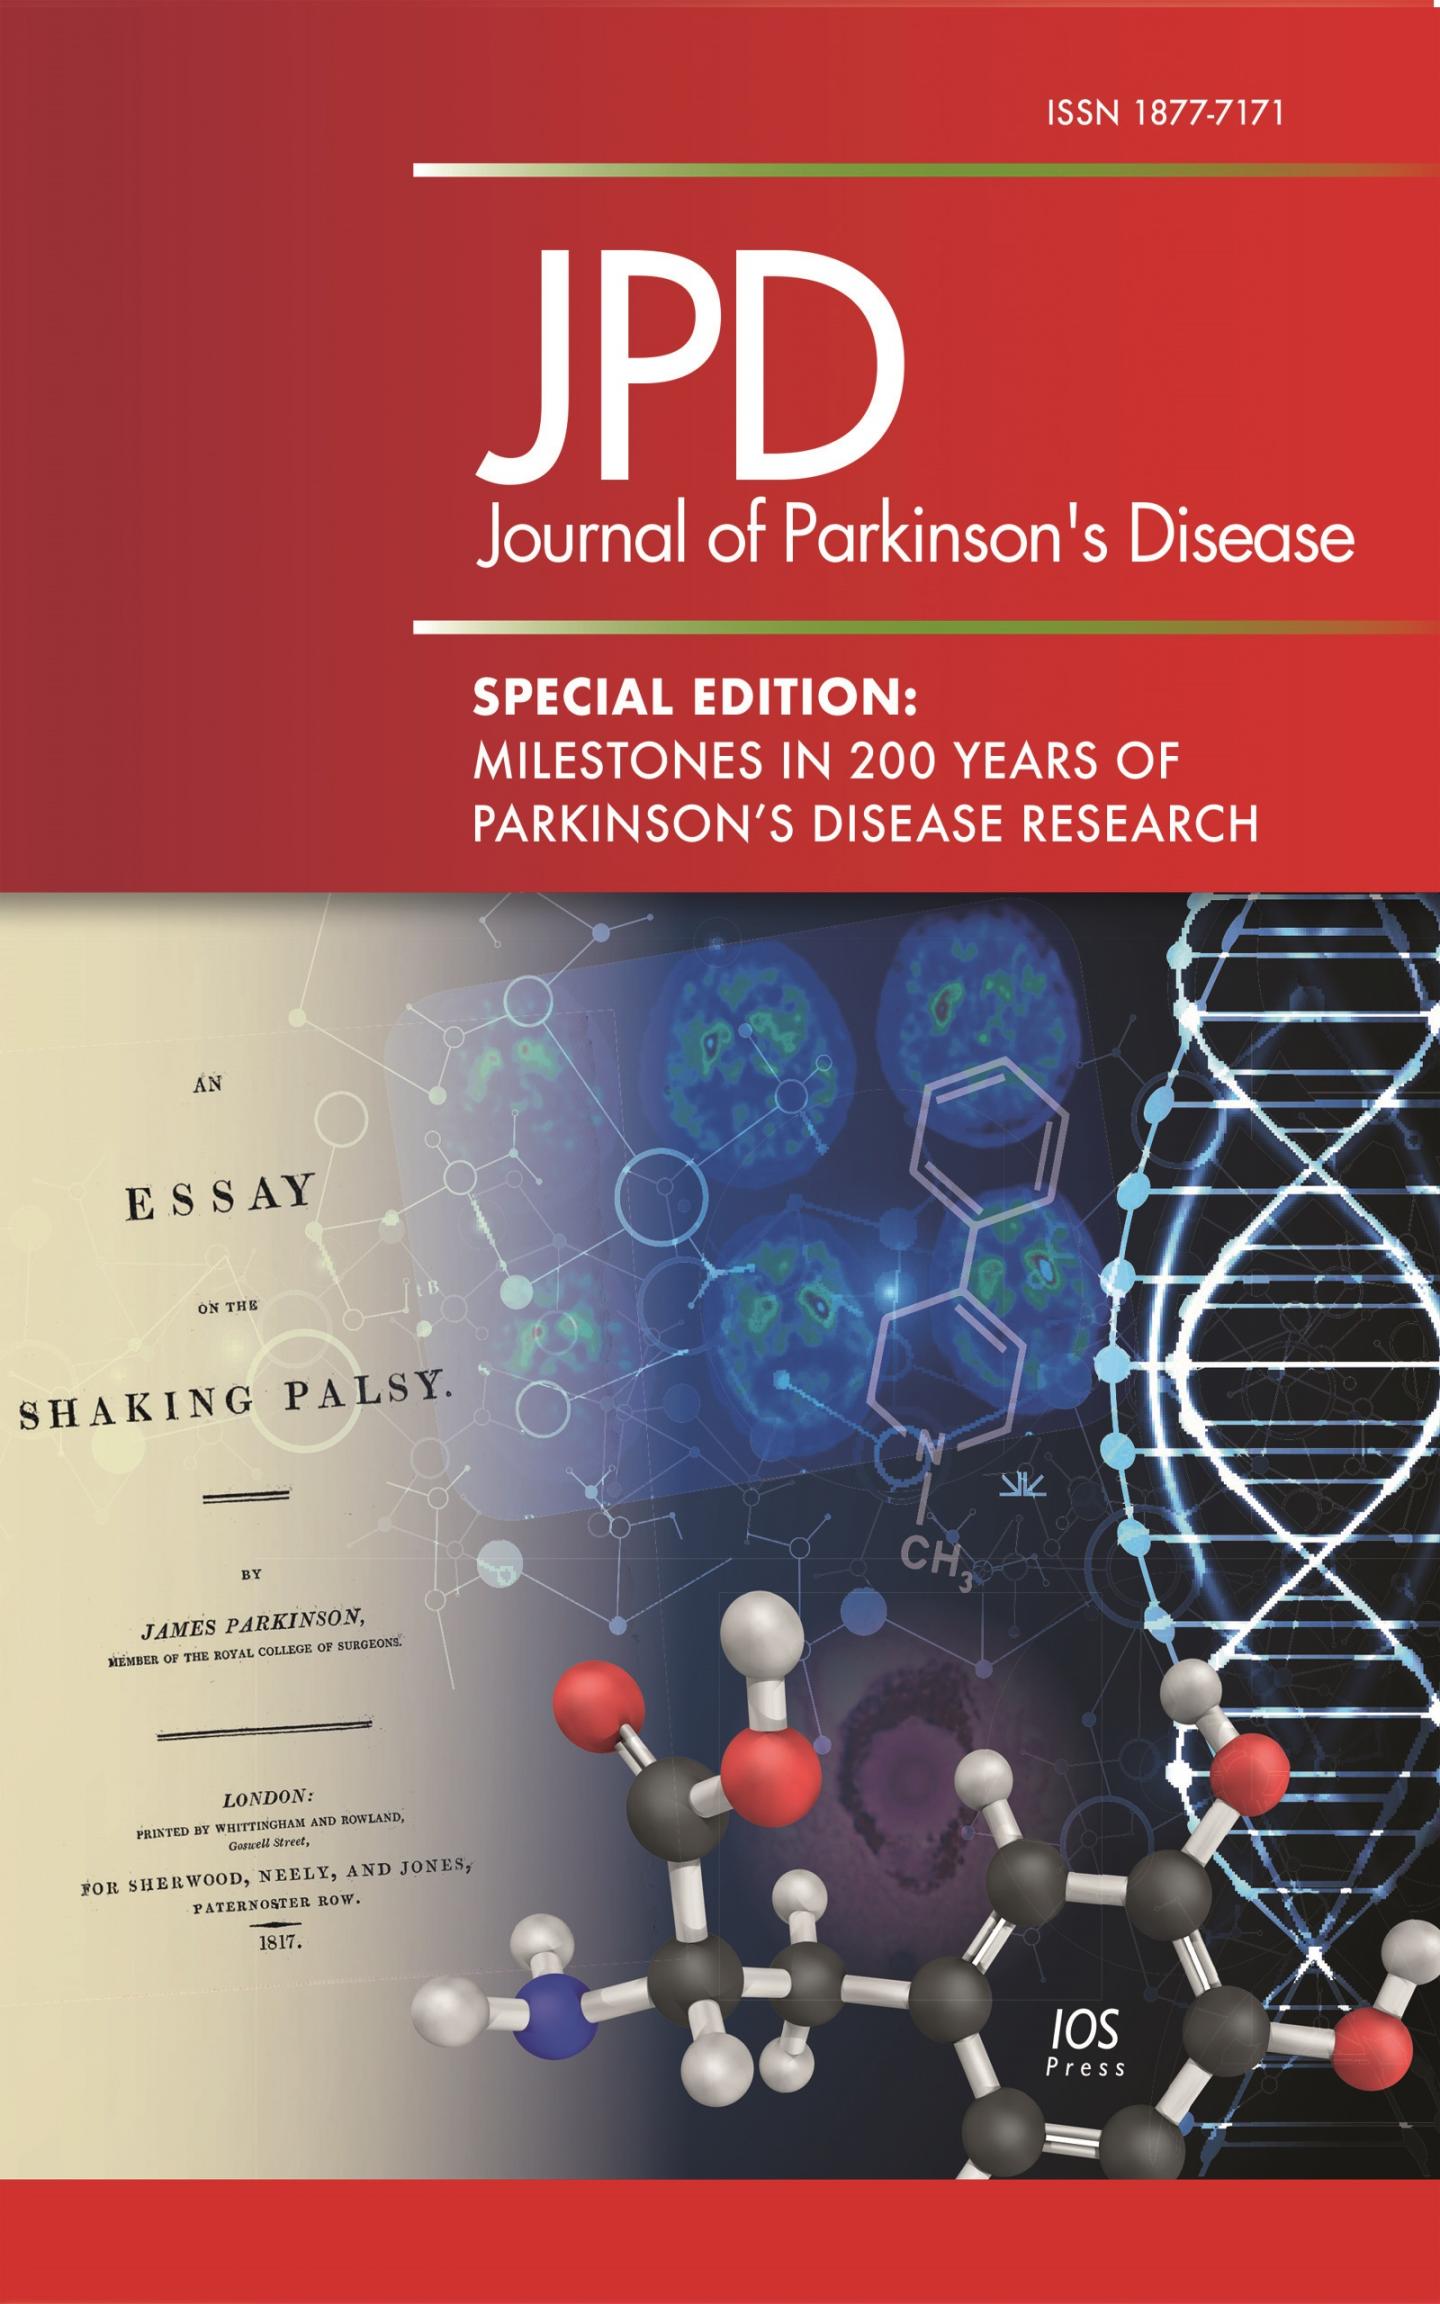 'Milestones in 200 Years of Parkinson's Disease Research'